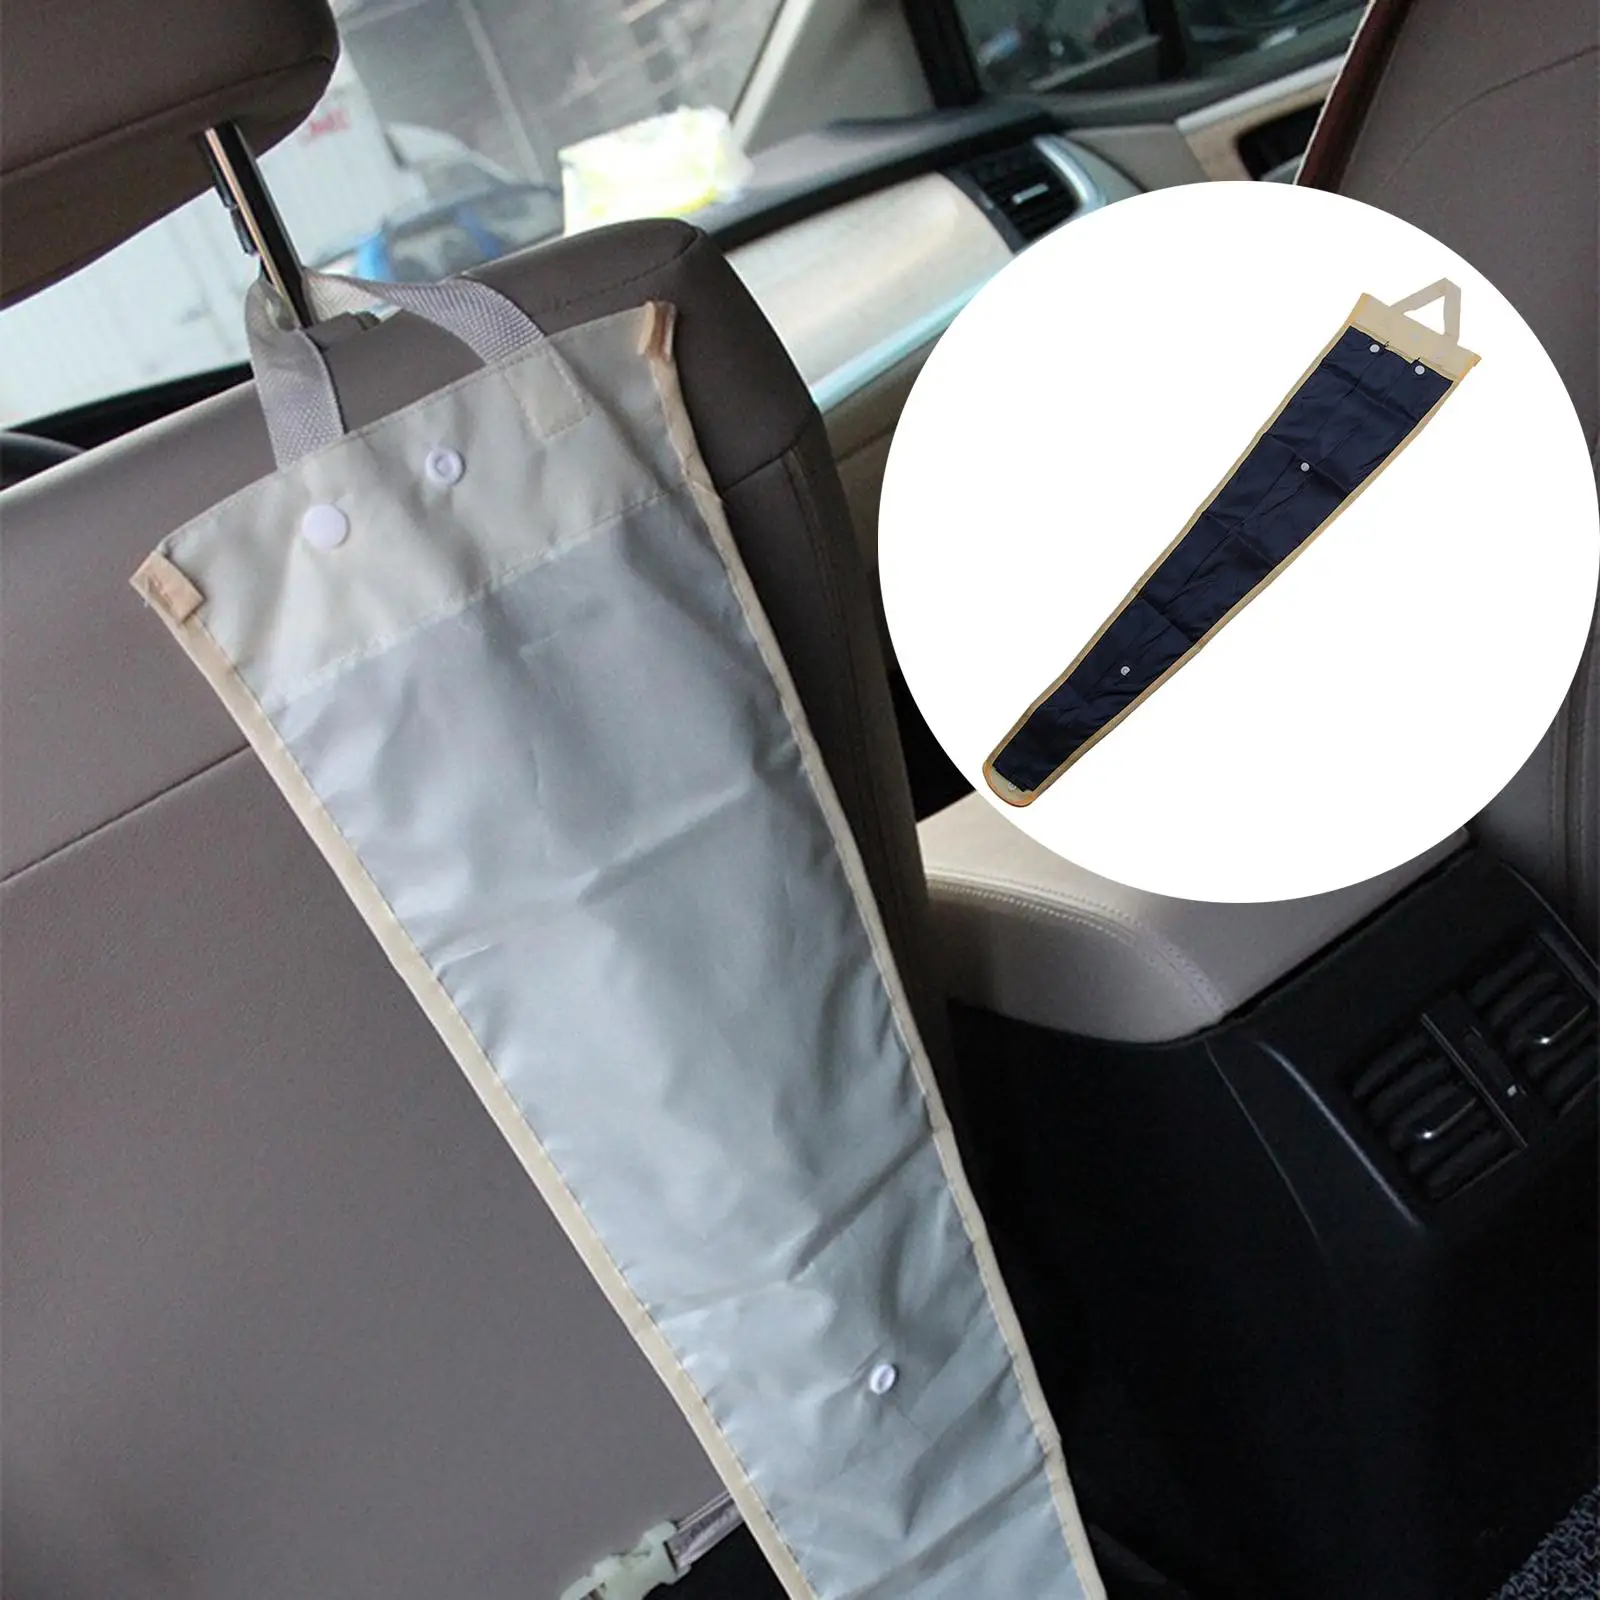 Umbrella Storage Bag Foldable Multifunction Waterproof Inside Easy to Install Holder Sheath for Car Seat Back Wet Rain